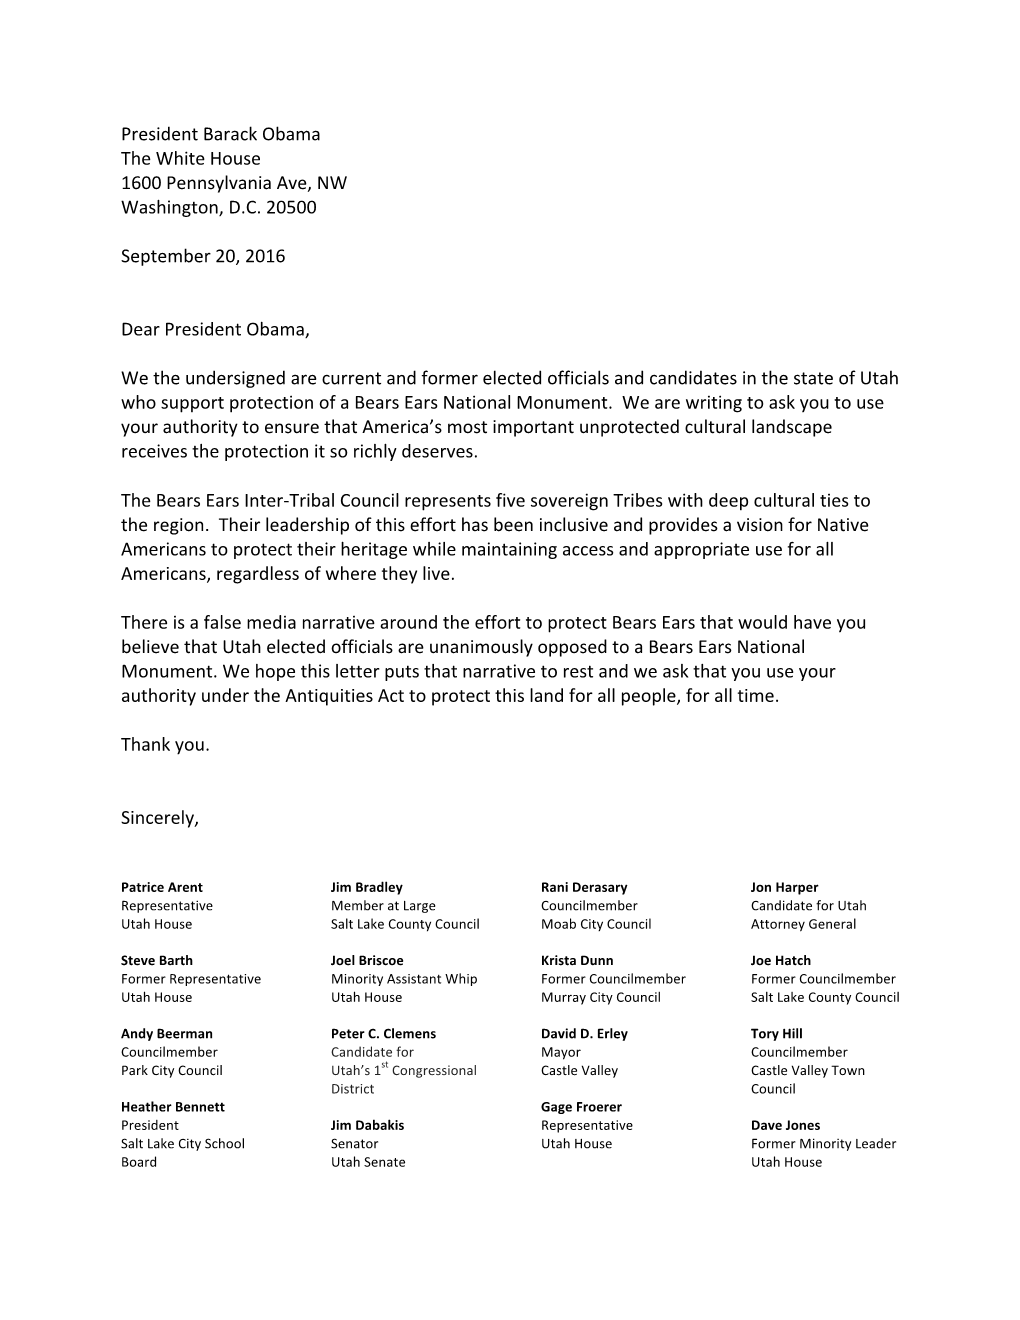 Letter of Support for Bears Ears National Monument from Utah